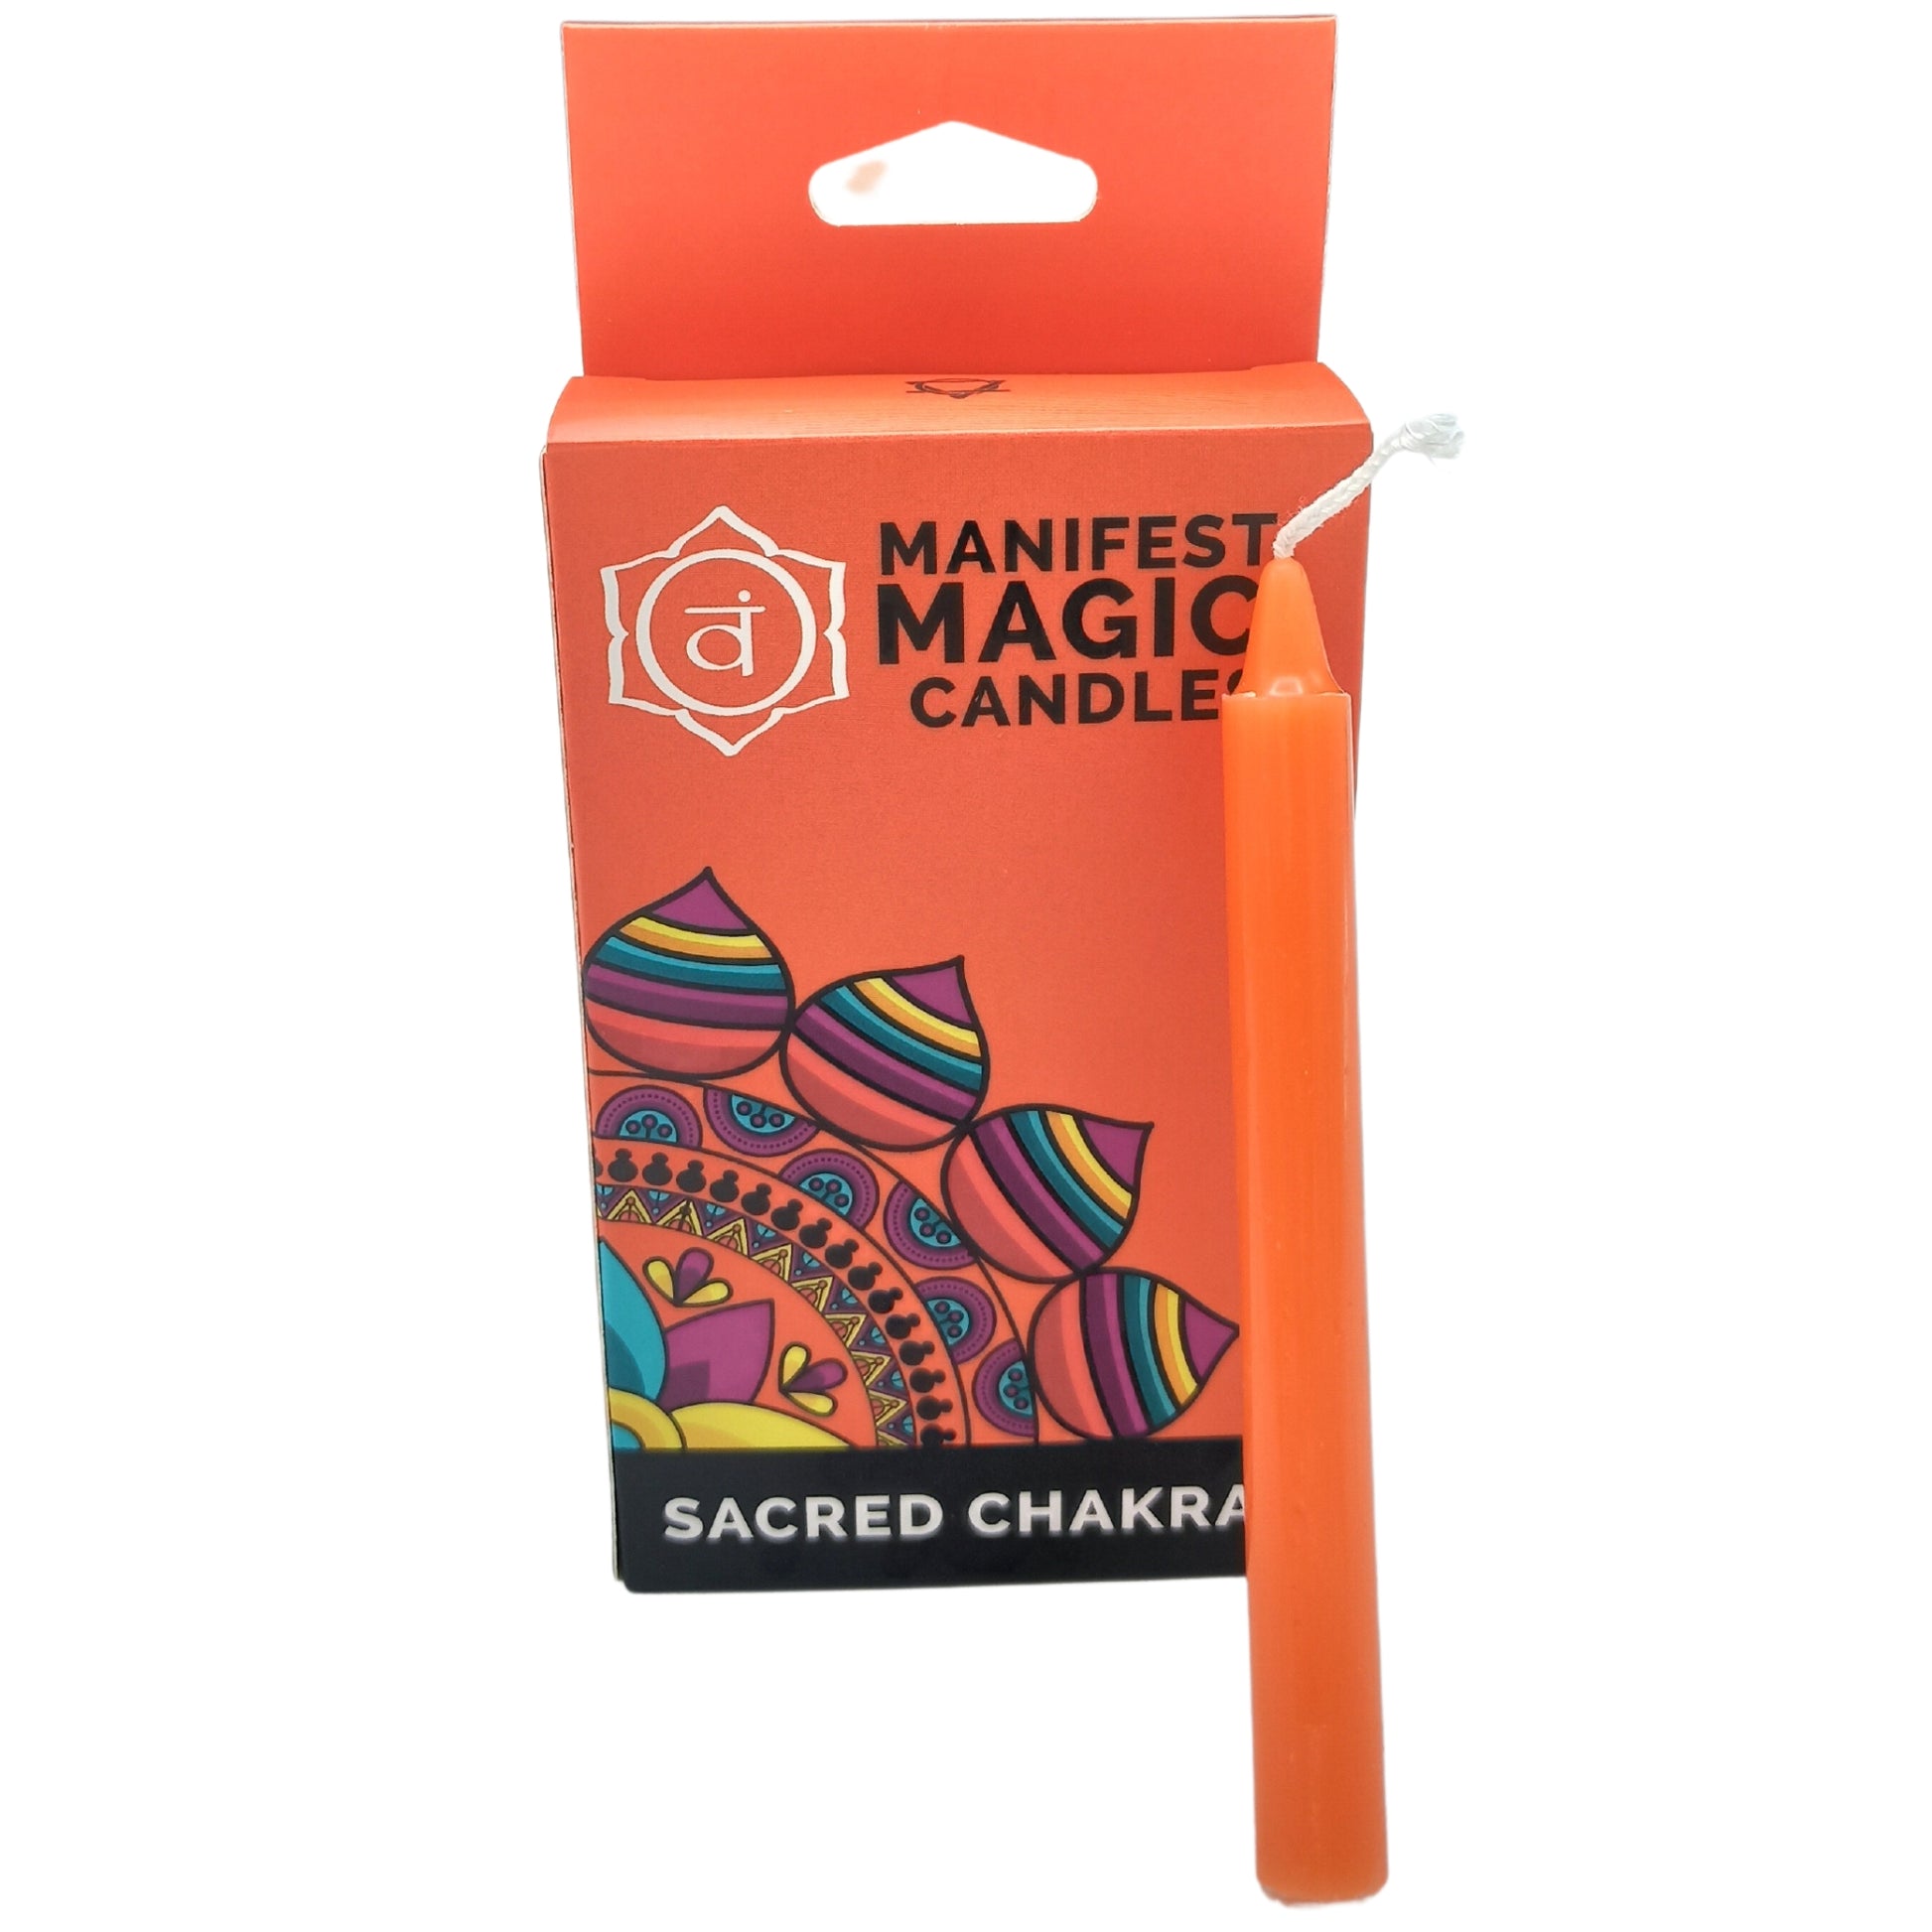 Manifest Magic Candles (pack of 12) - Orange - Sacred Chakra - Kaftans direct